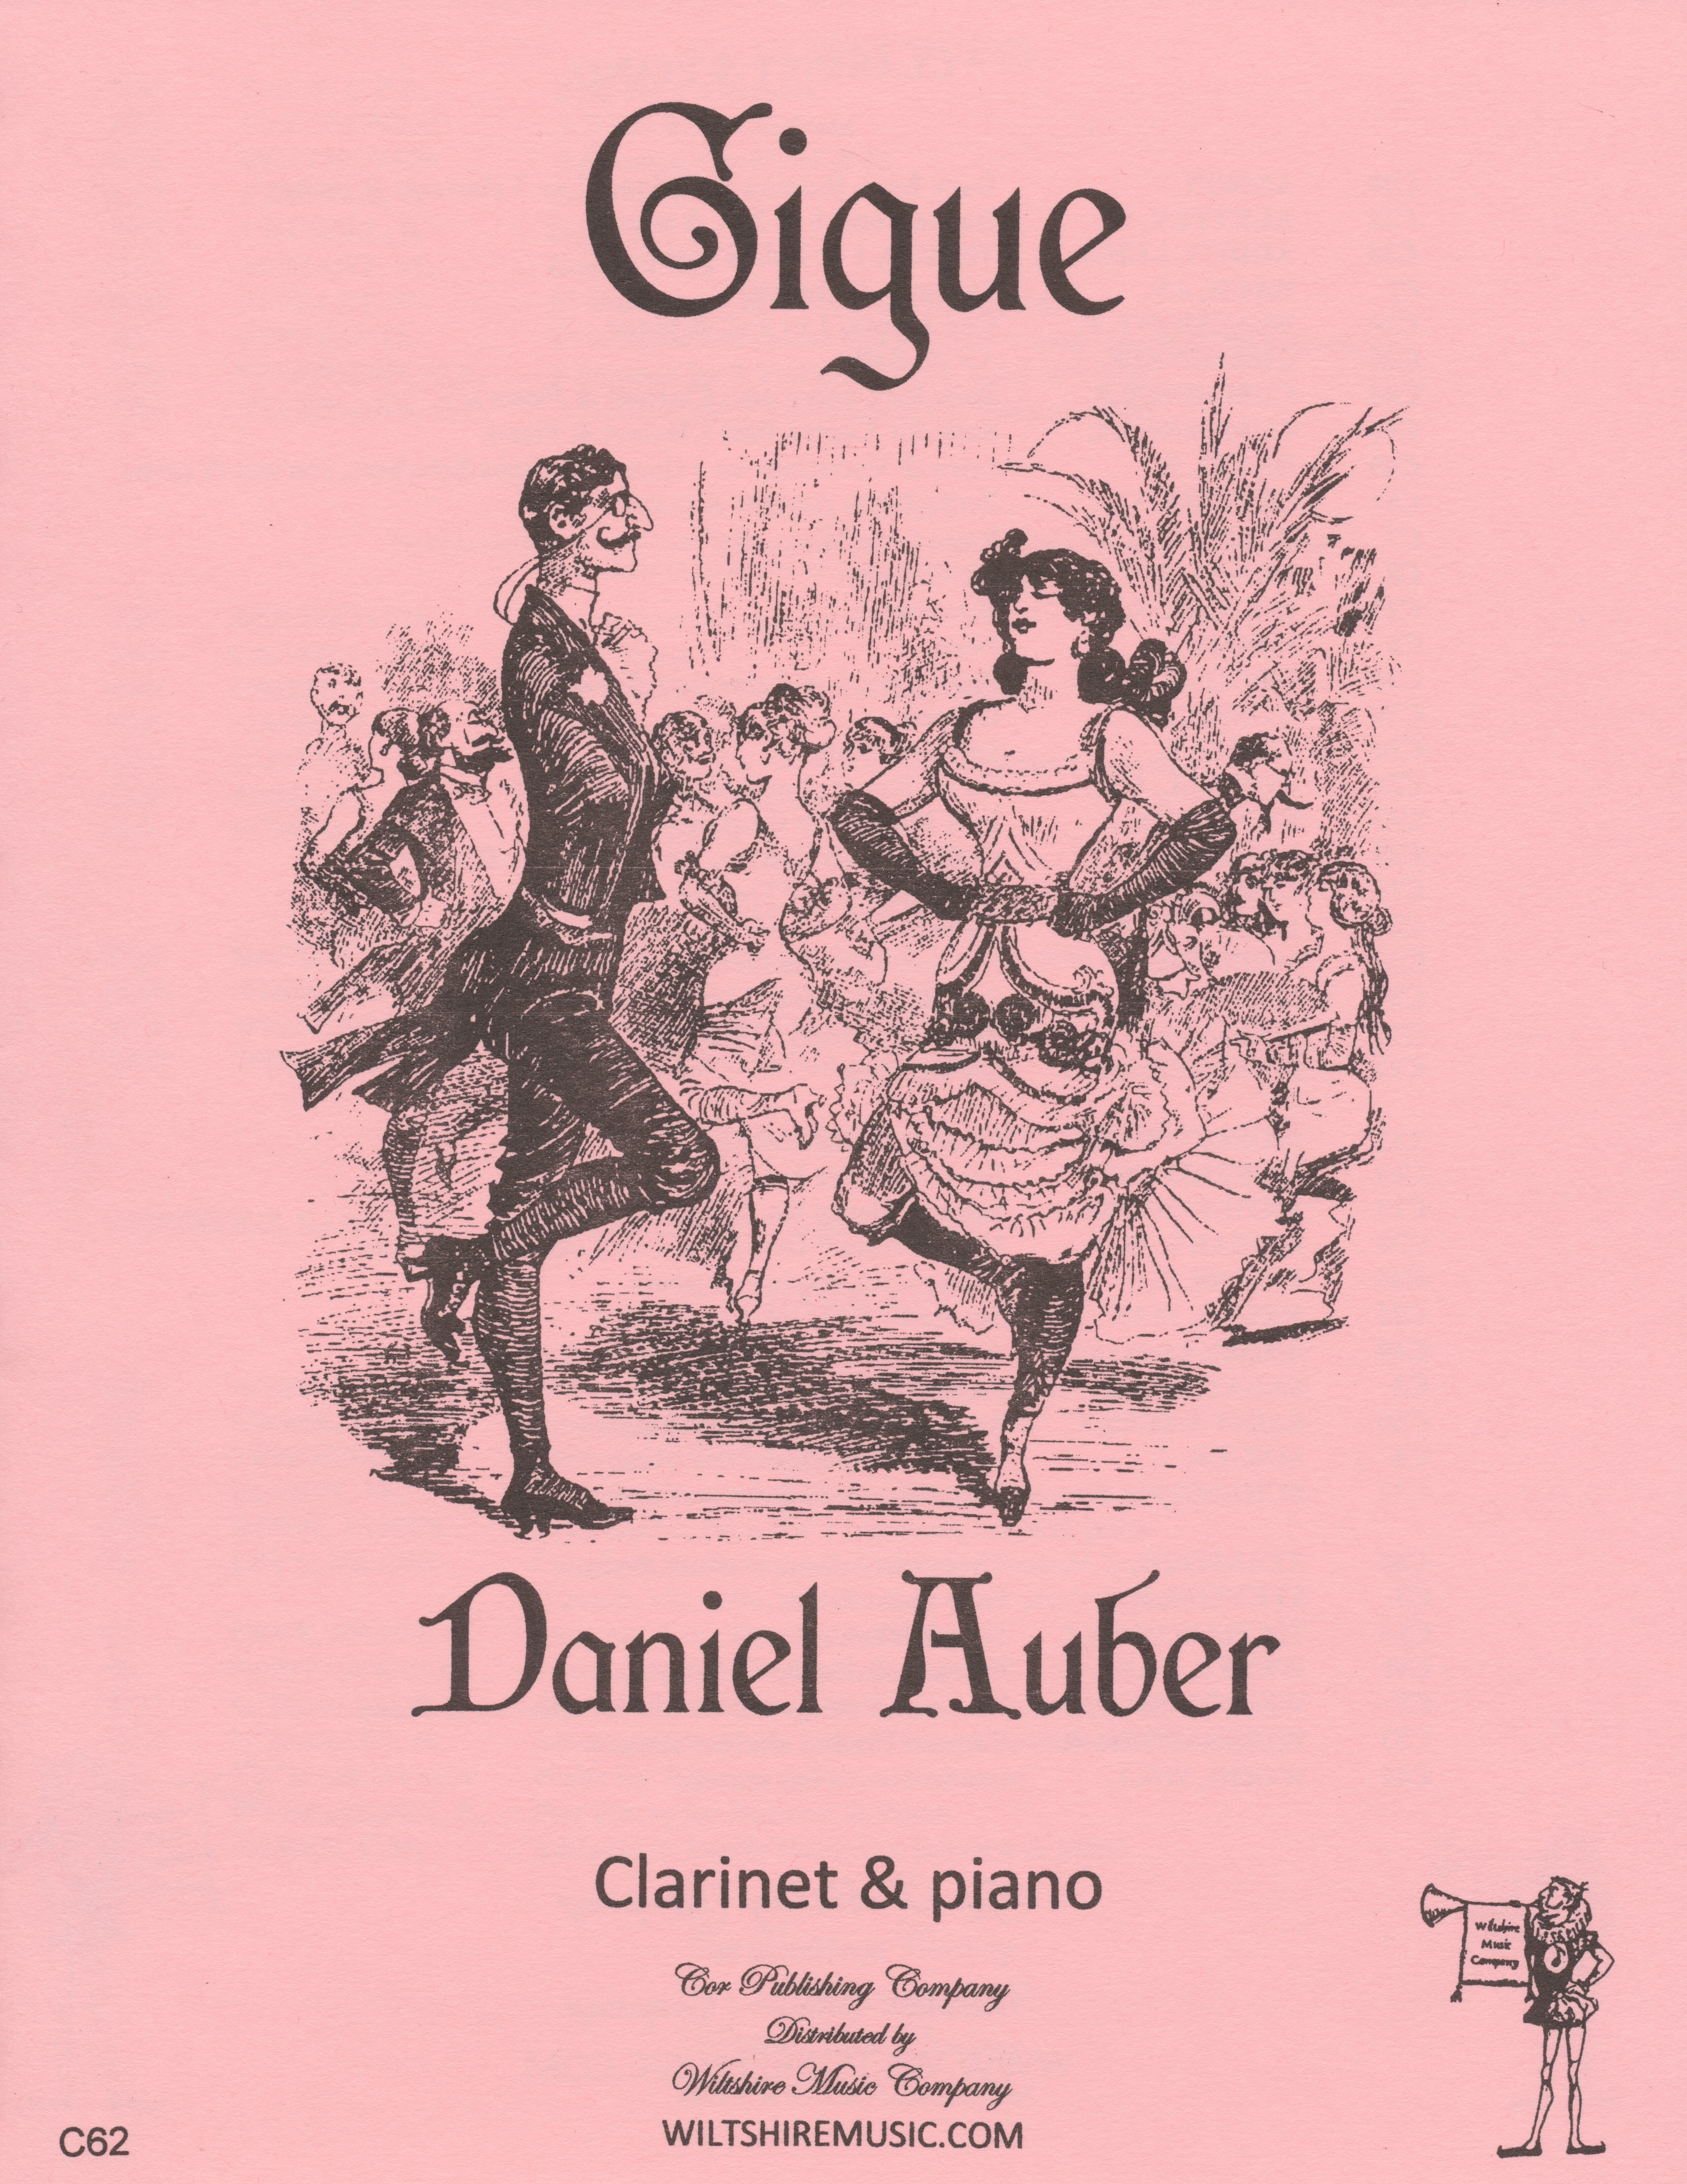 Gigue, Daniel Auber, clarinet & piano